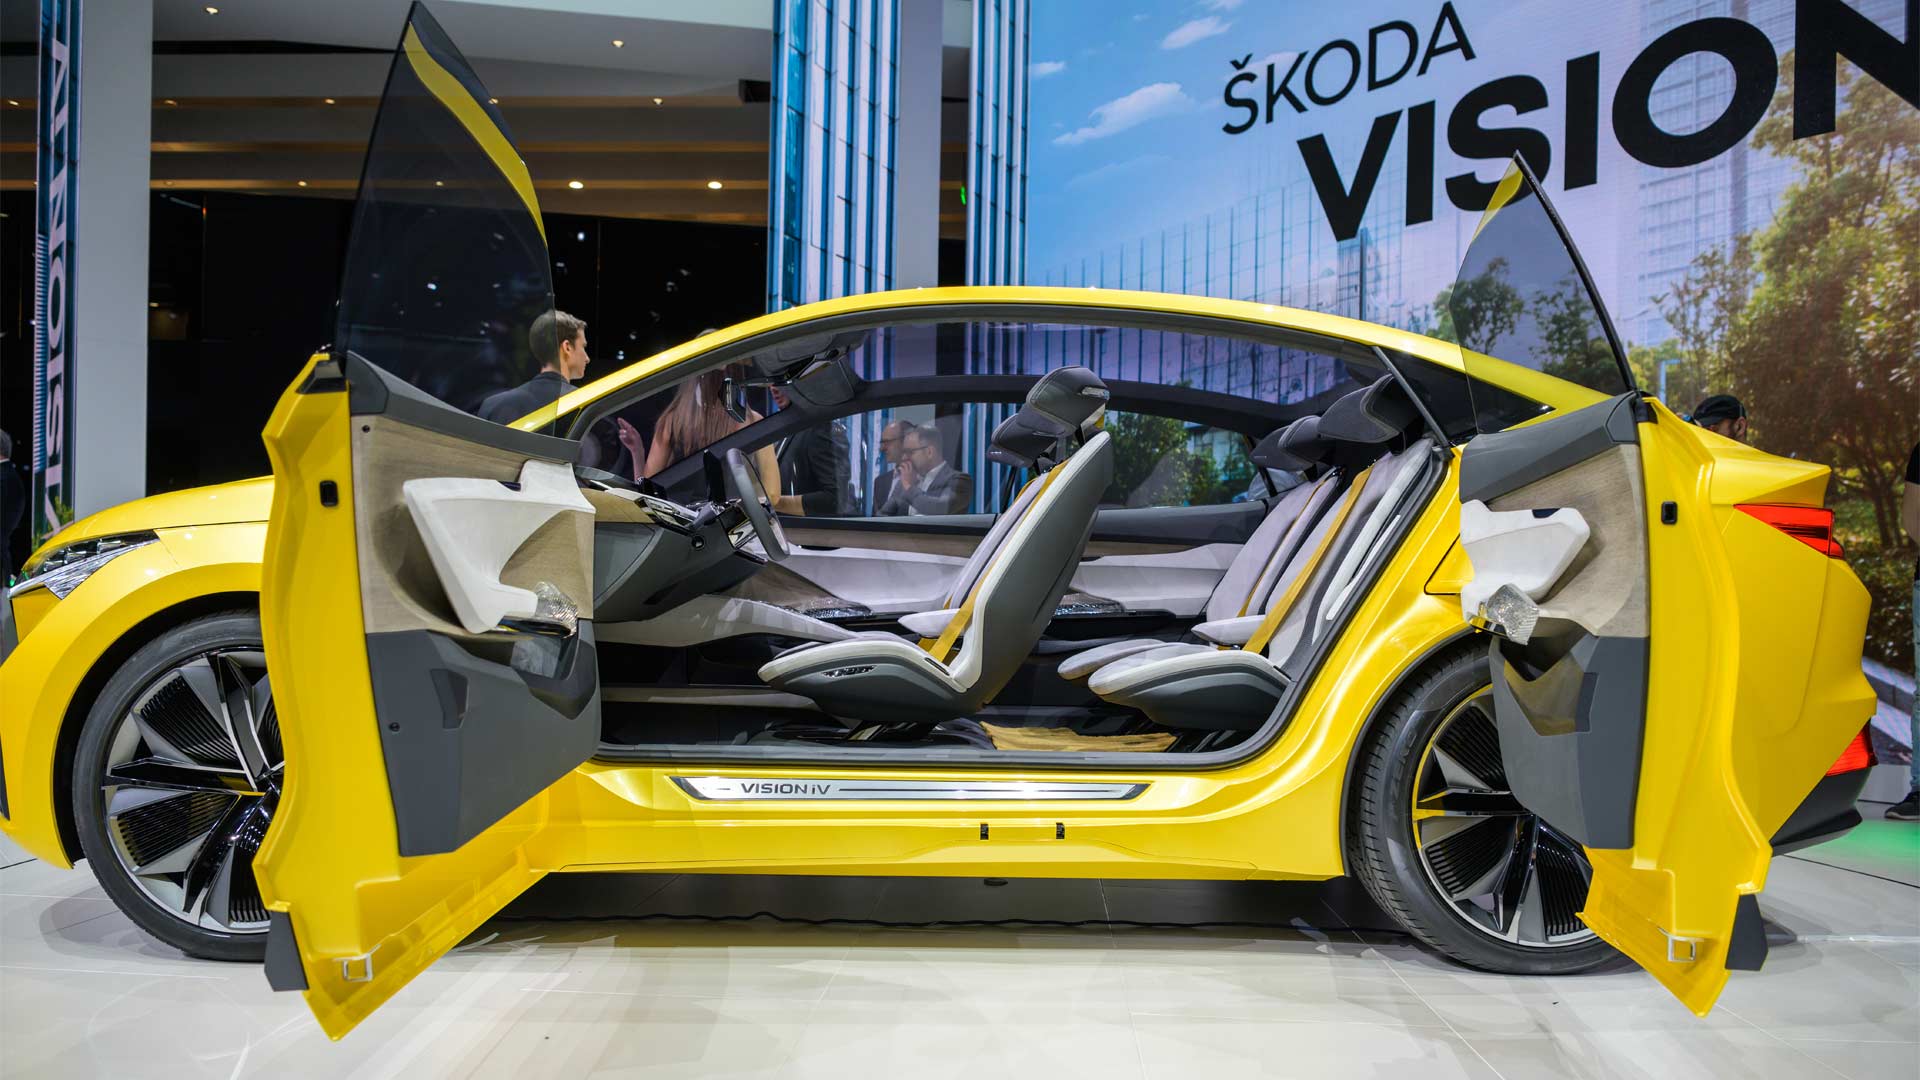 ŠKODA VISION iV Concept Doors